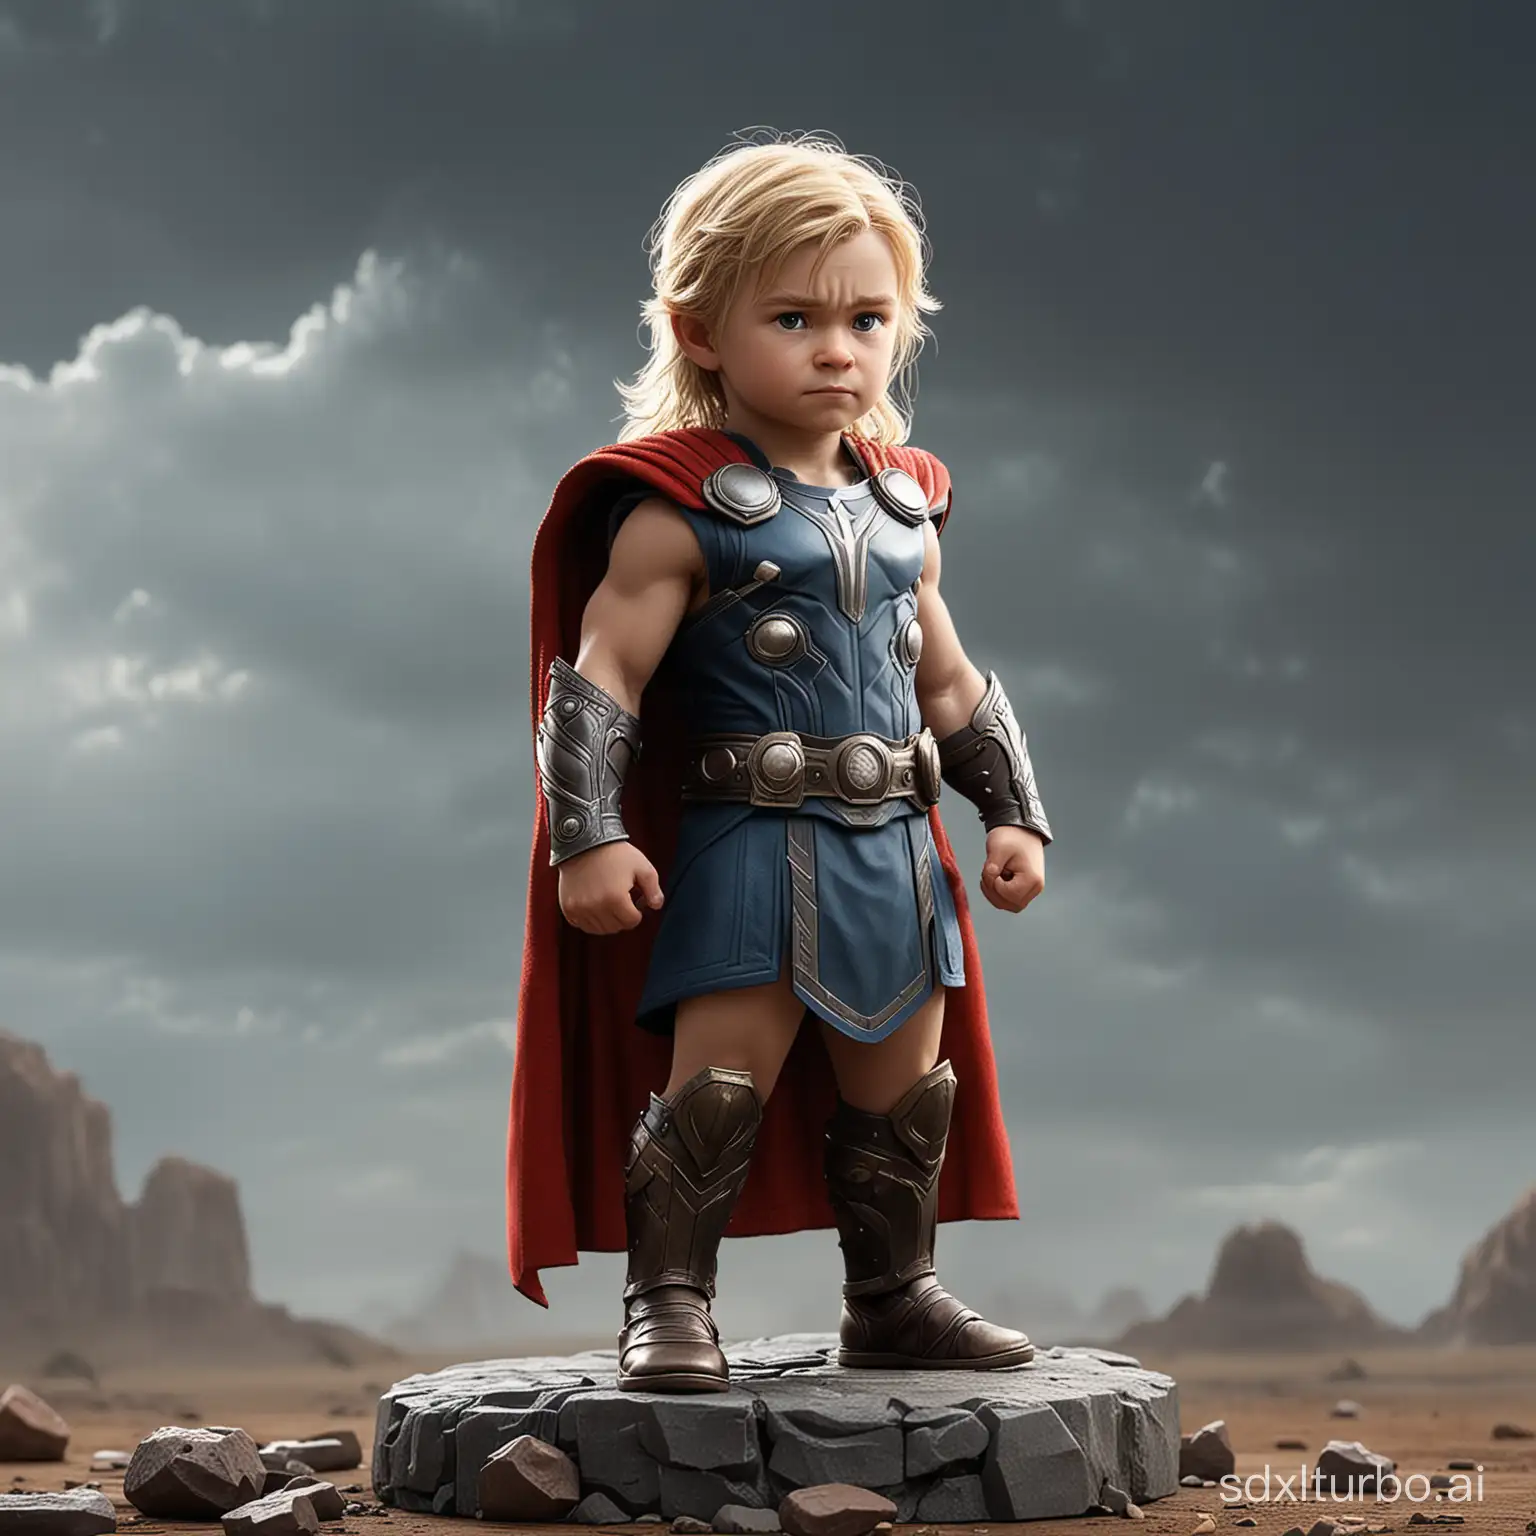 Adorable-Little-Child-Dressed-as-Thor-God-of-Thunder